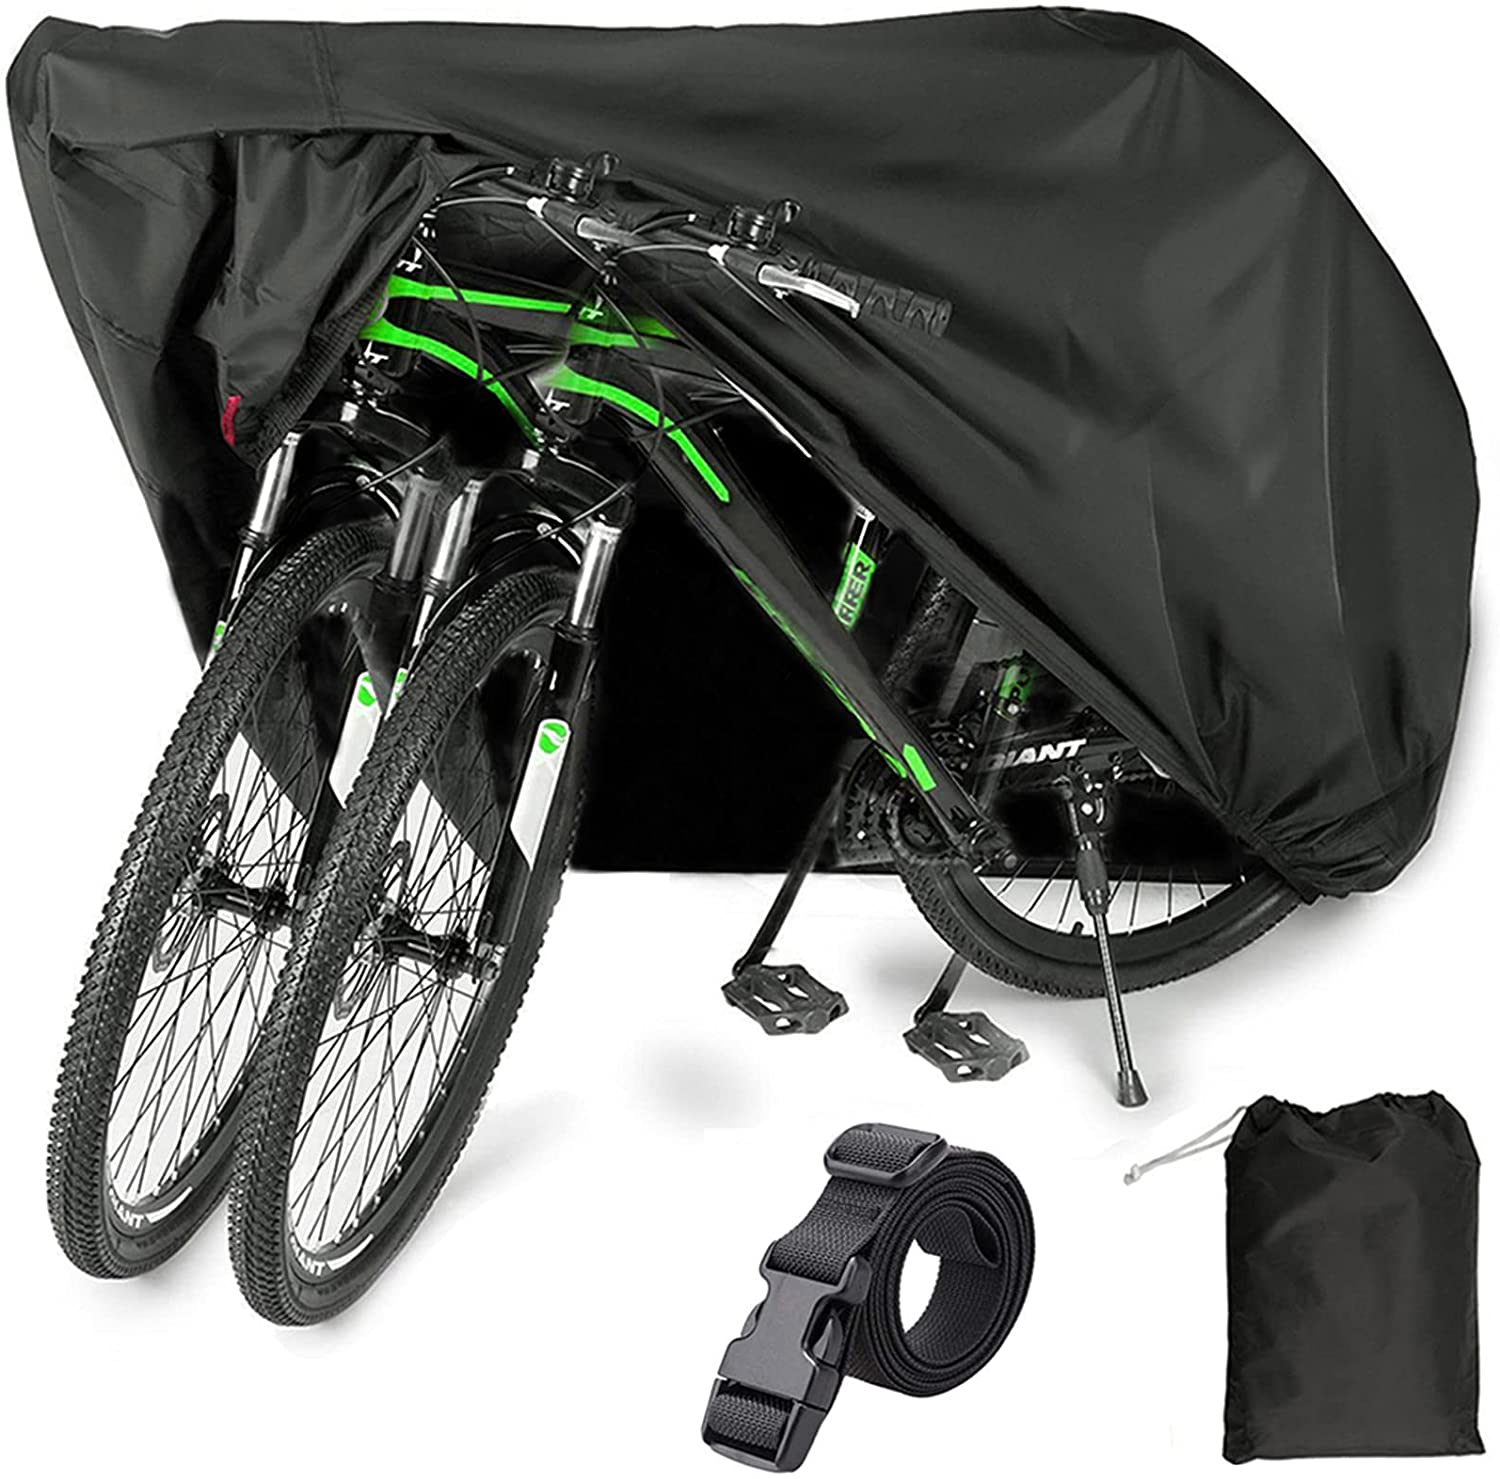 Waterproof Bicycle Cycle Bike Cover Silver Outdoor Rain UV Protector For 1 Bike 